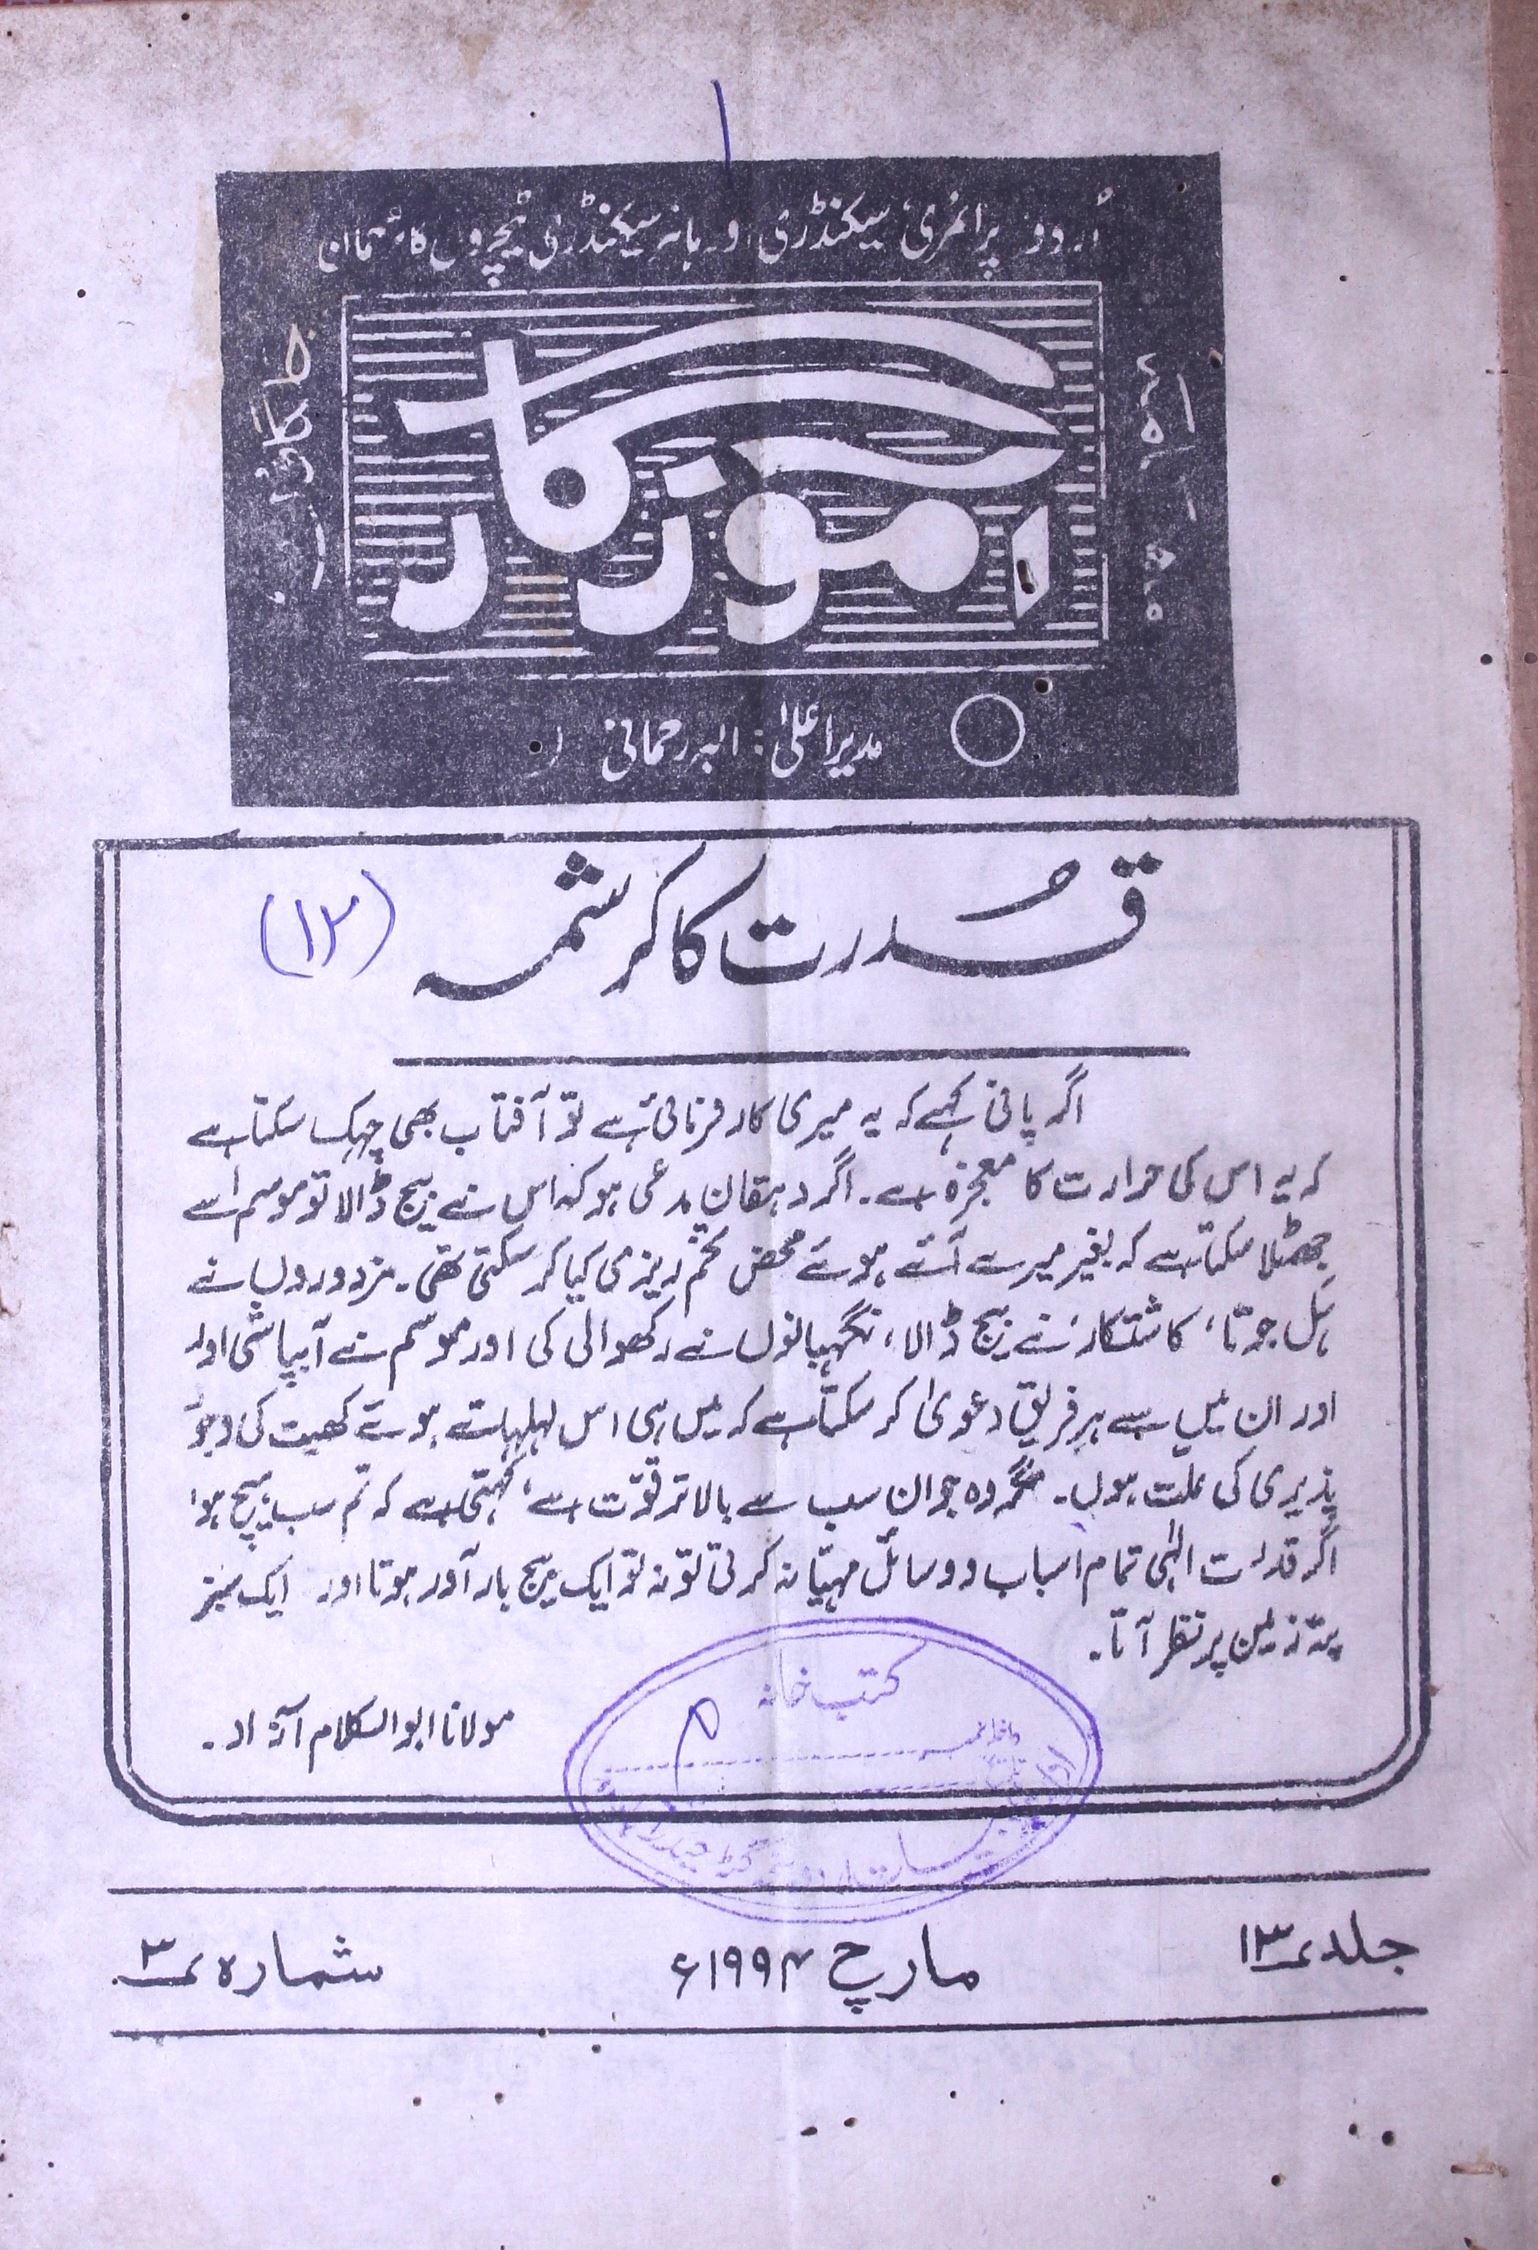 Aamozgar Jild 13 Sh. 3 March 1994